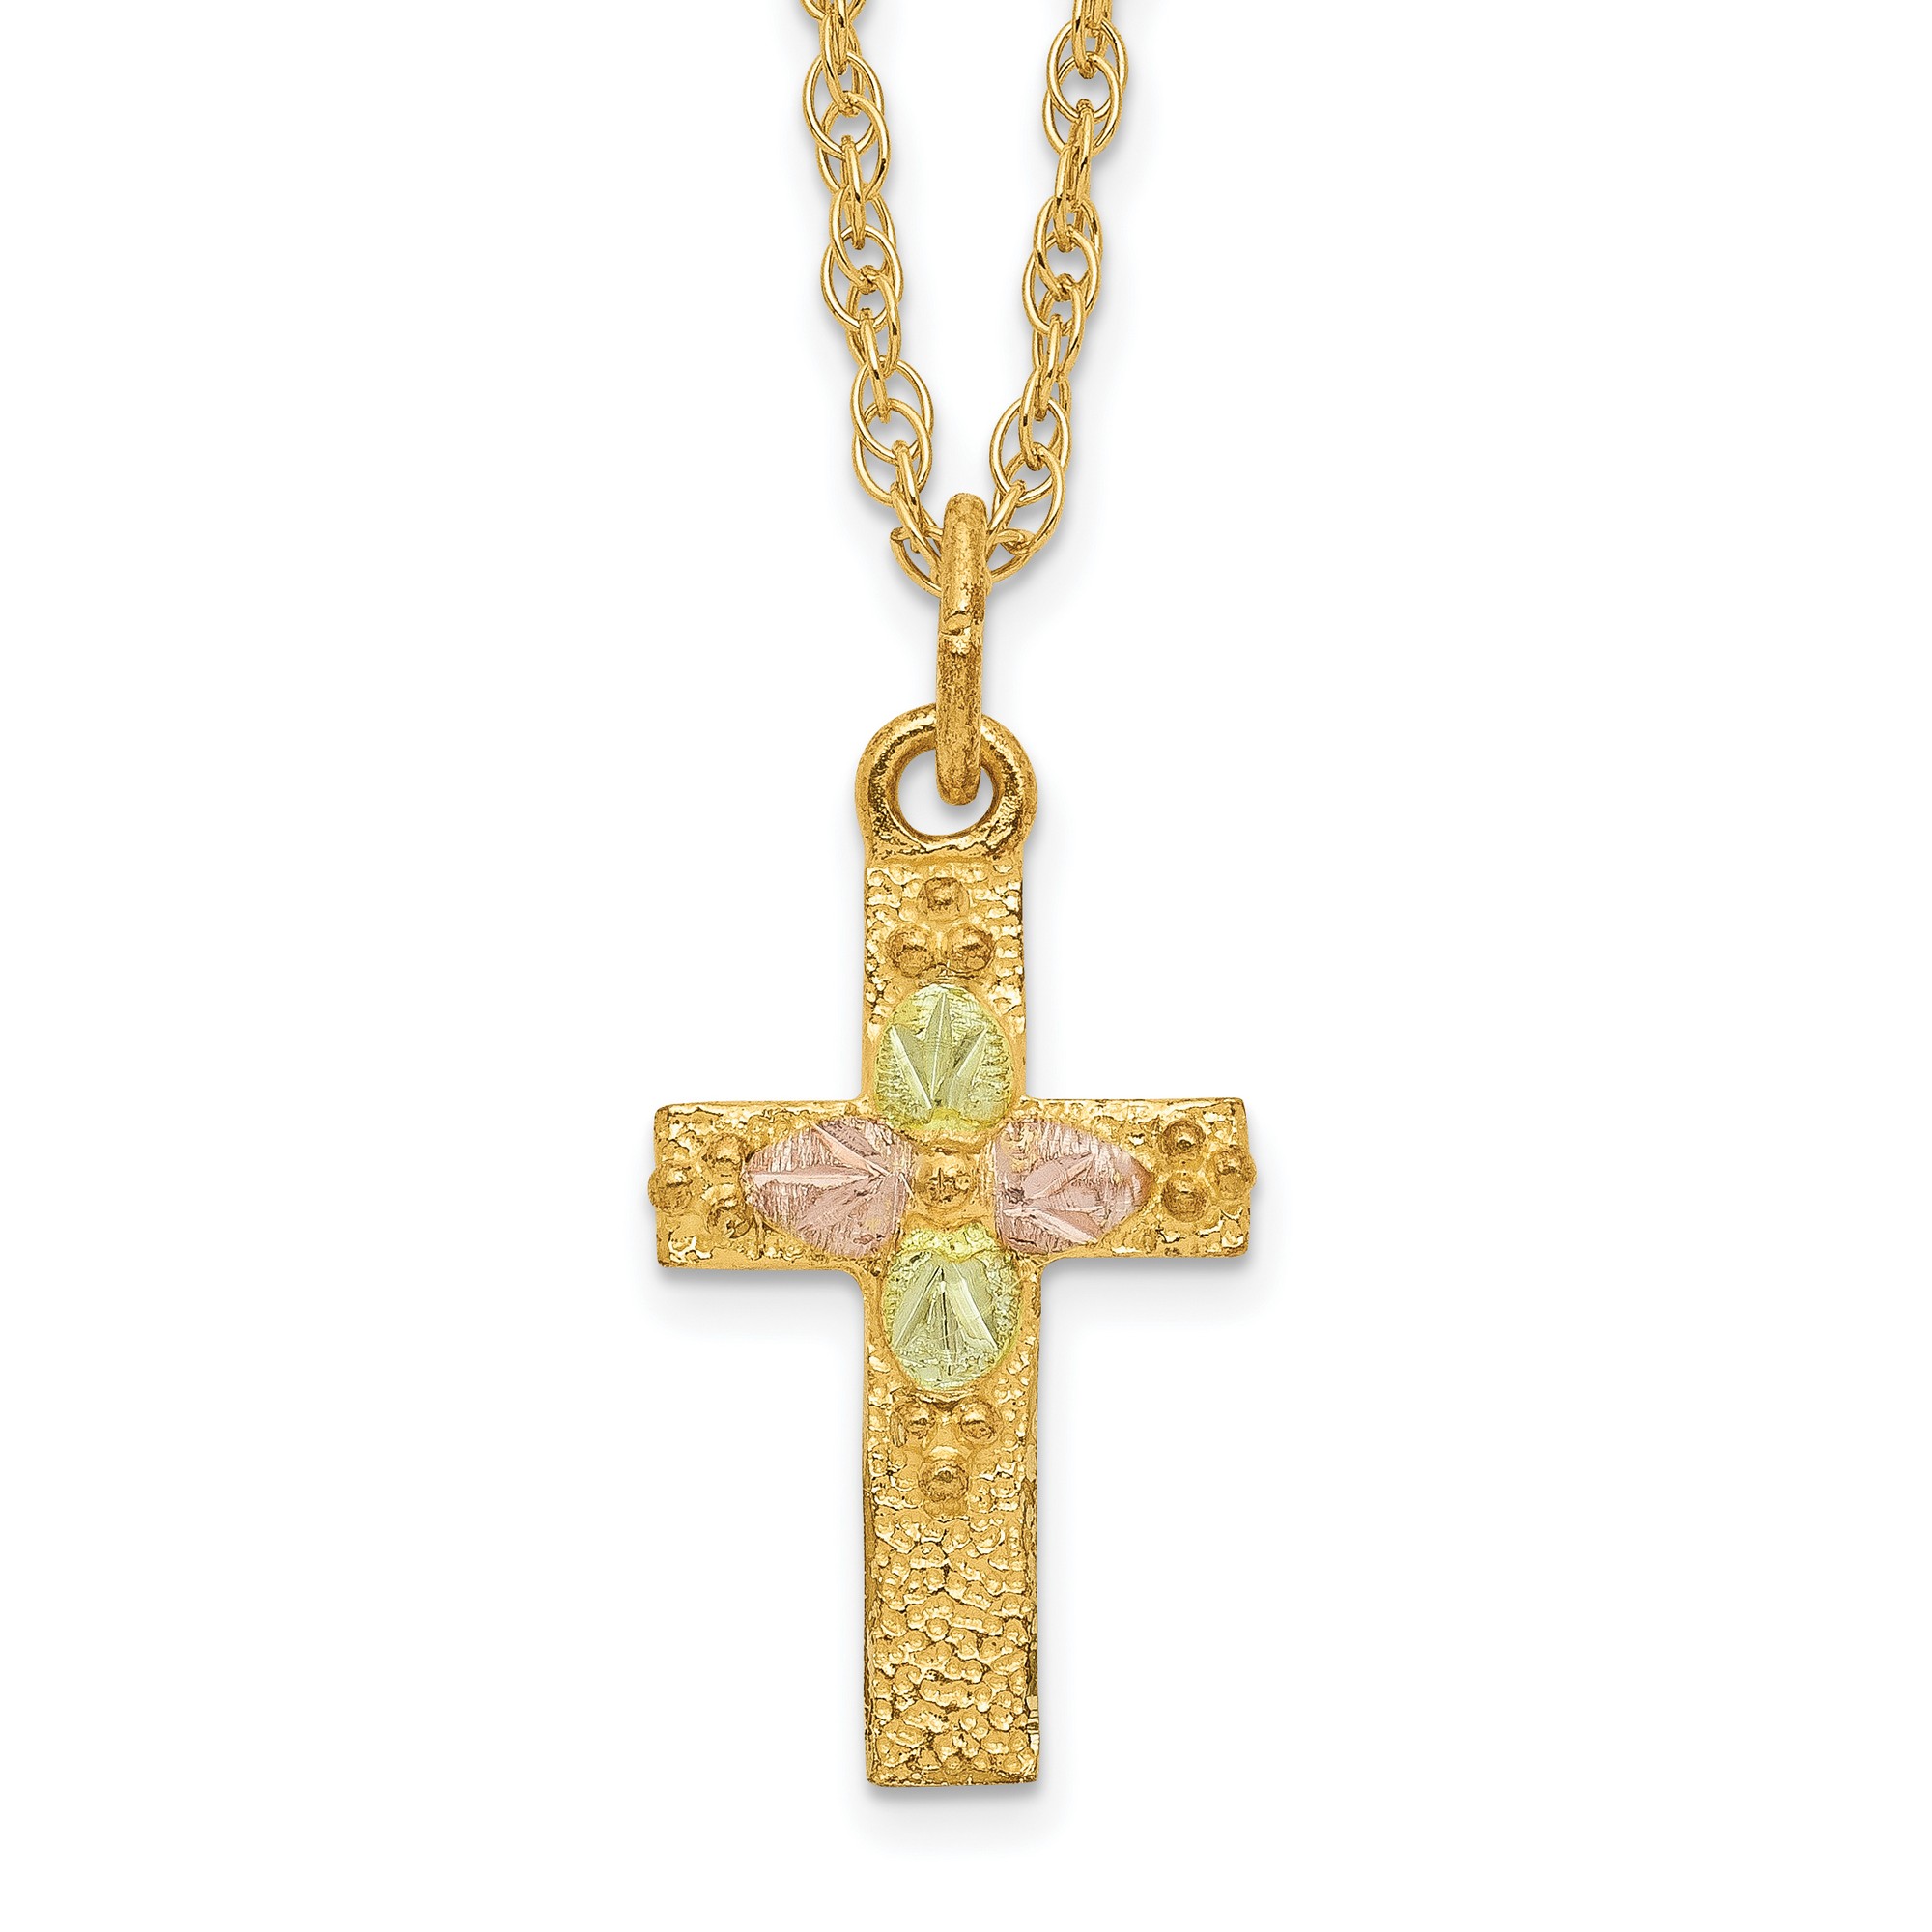 10K Yellow Gold Black Hills Gold Cross Necklace 15 mm x 9 mm 1.58gr | eBay